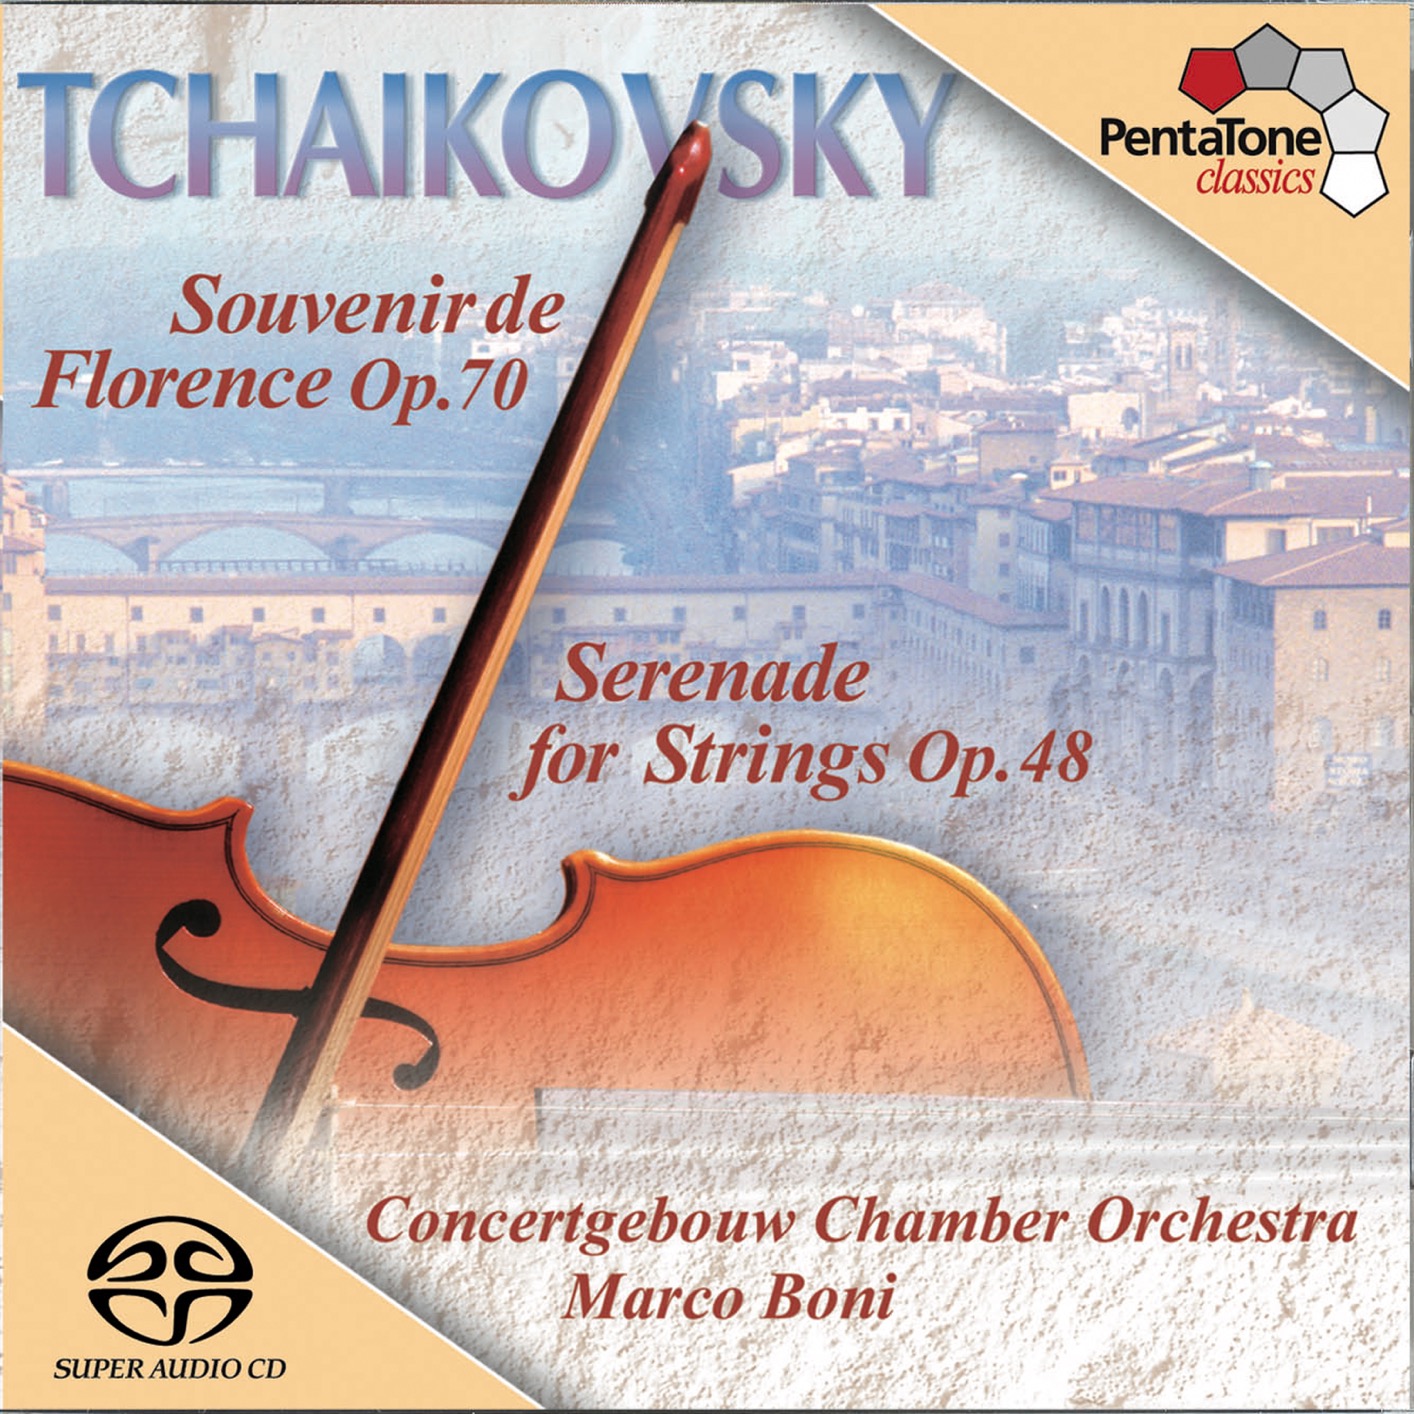 Marco Boni & Concertgebouw Chamber Orchestra – Tchaikovsky: Serenade for Strings / Souvenir De Florence (2002/2018) [FLAC 24bit/96kHz]